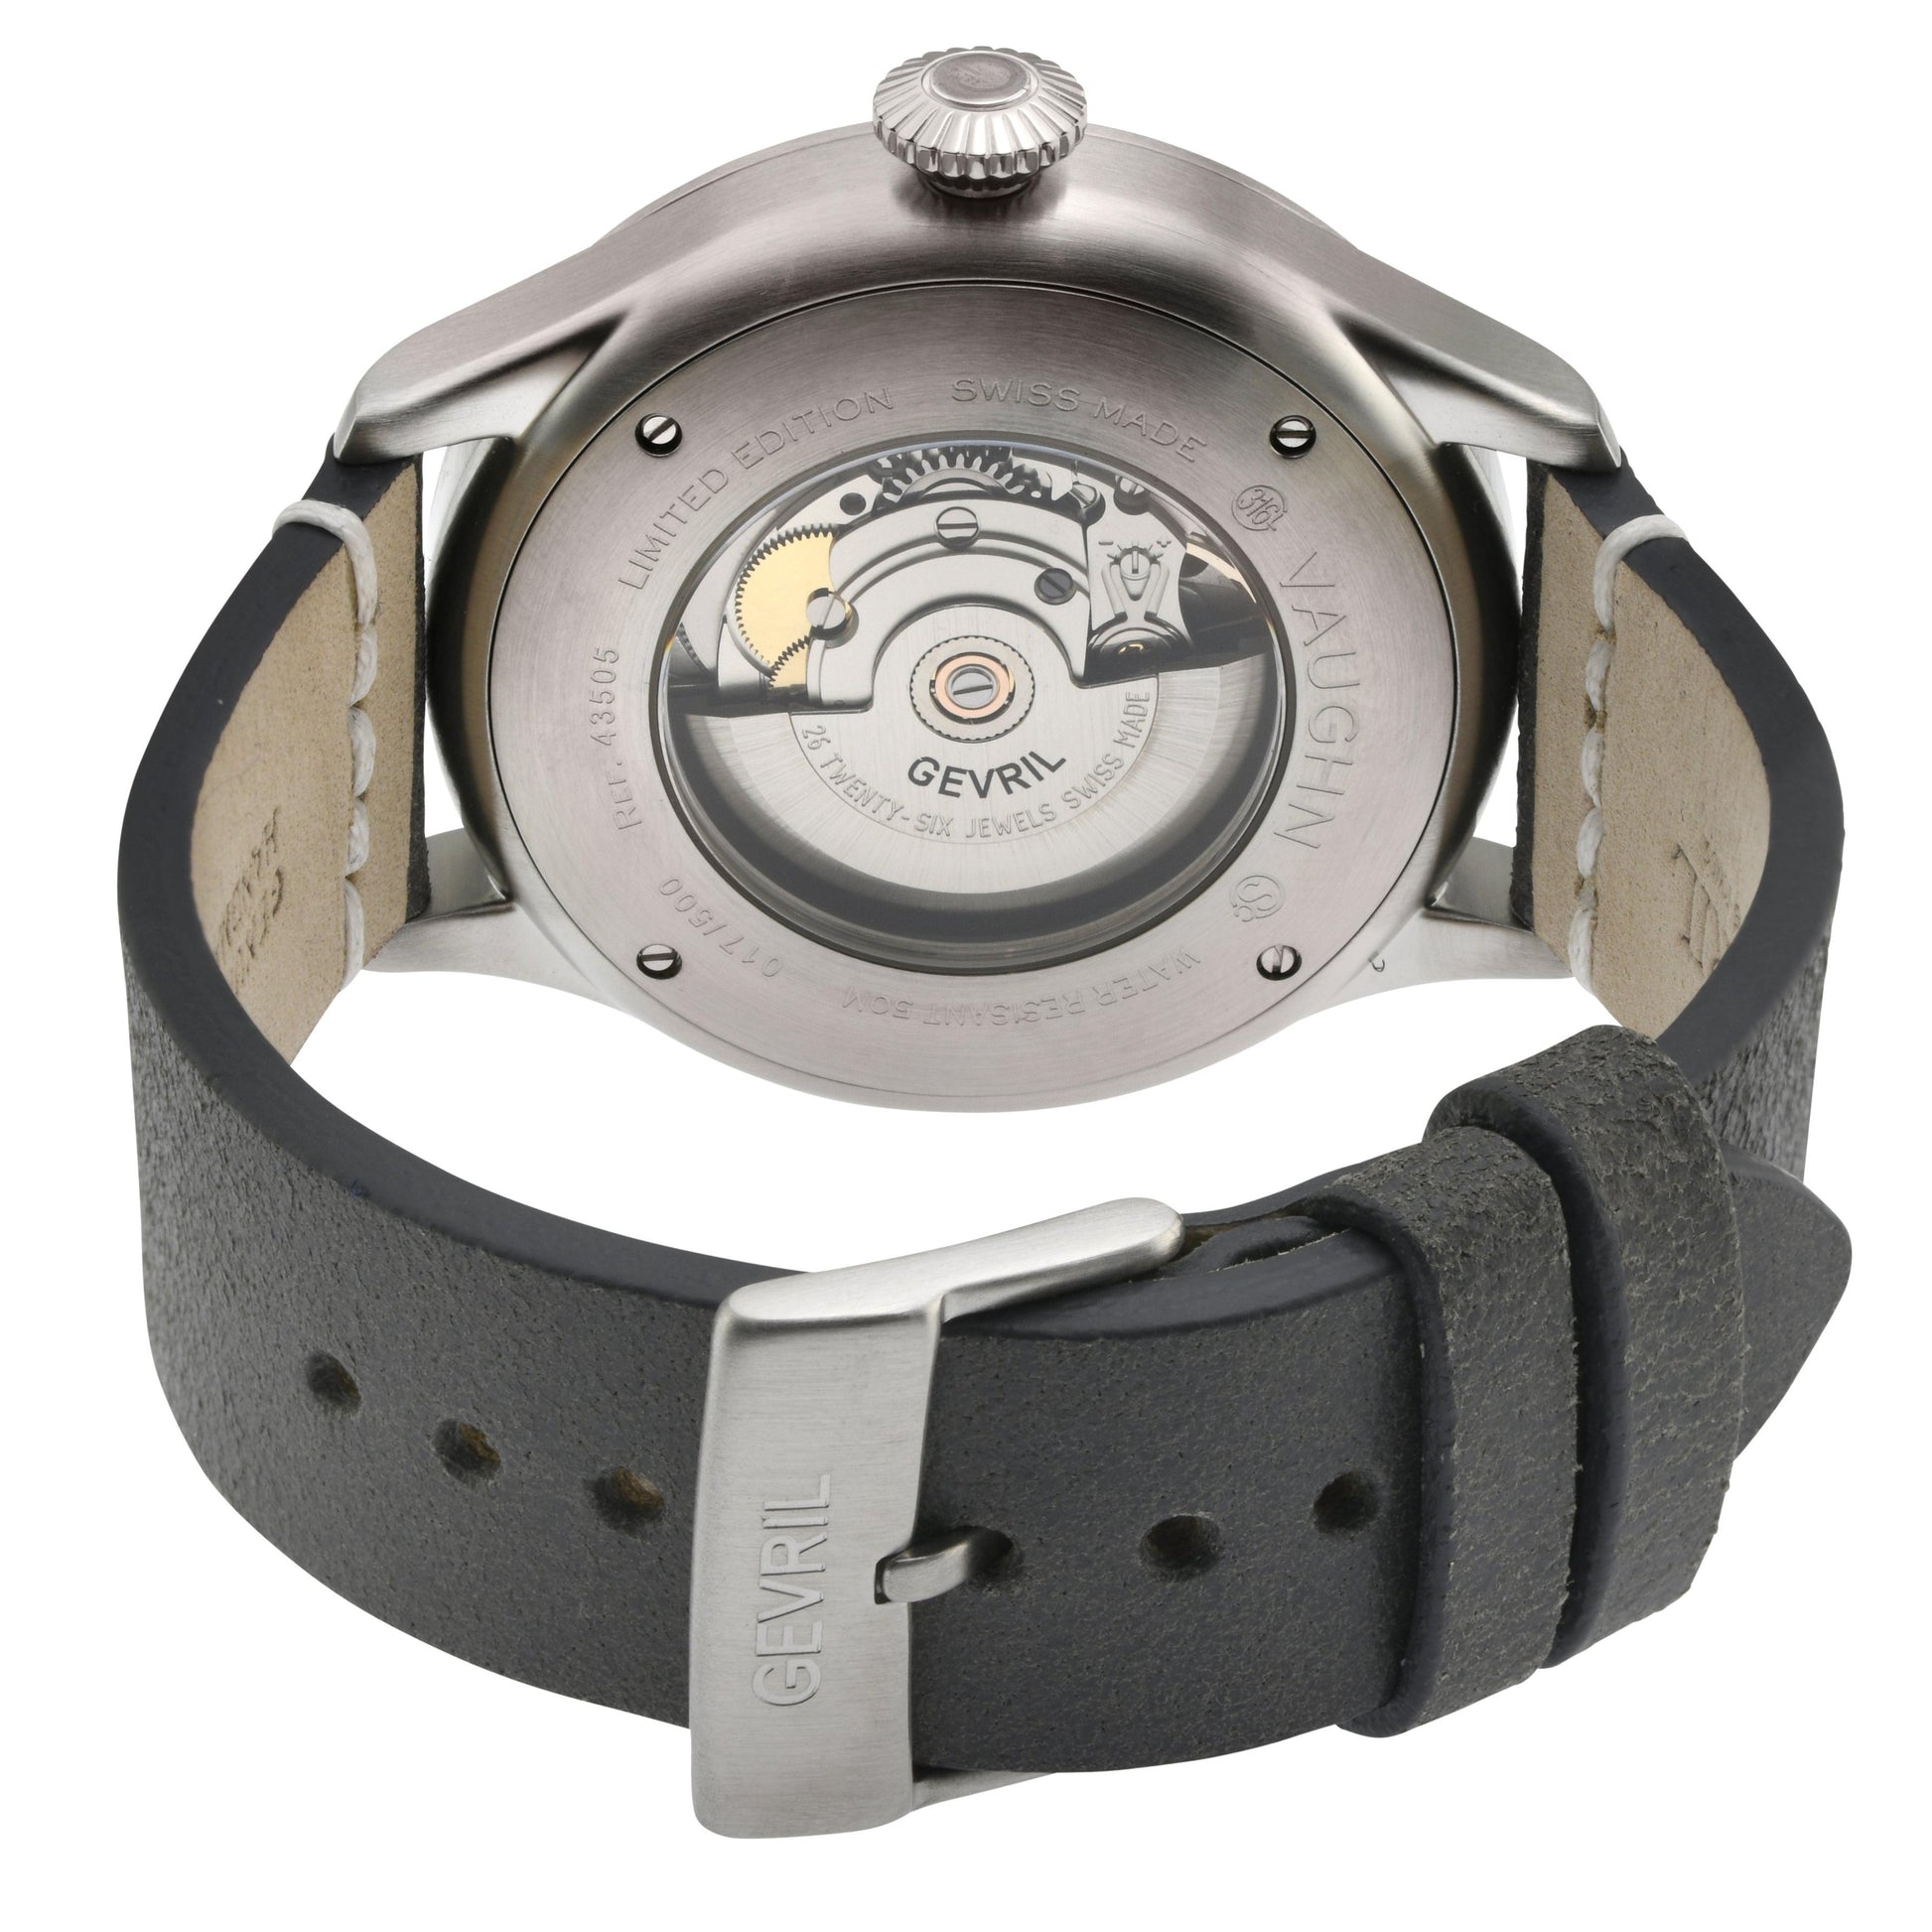 Gevril-Luxury-Swiss-Watches-Gevril Vaughn - Pilot-43505